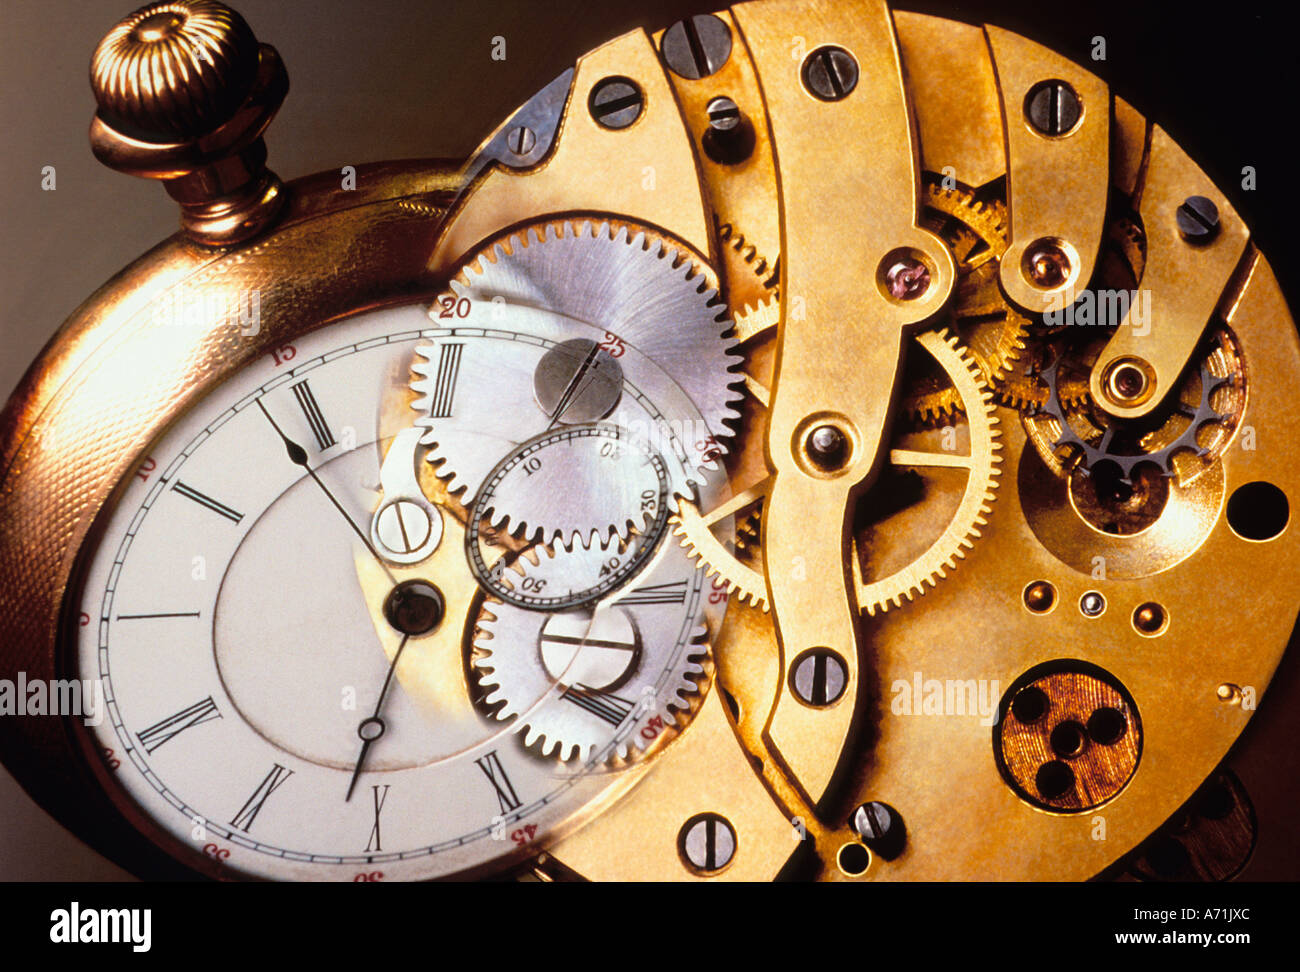 Reloj de bolsillo steampunk. Engranes a la vista